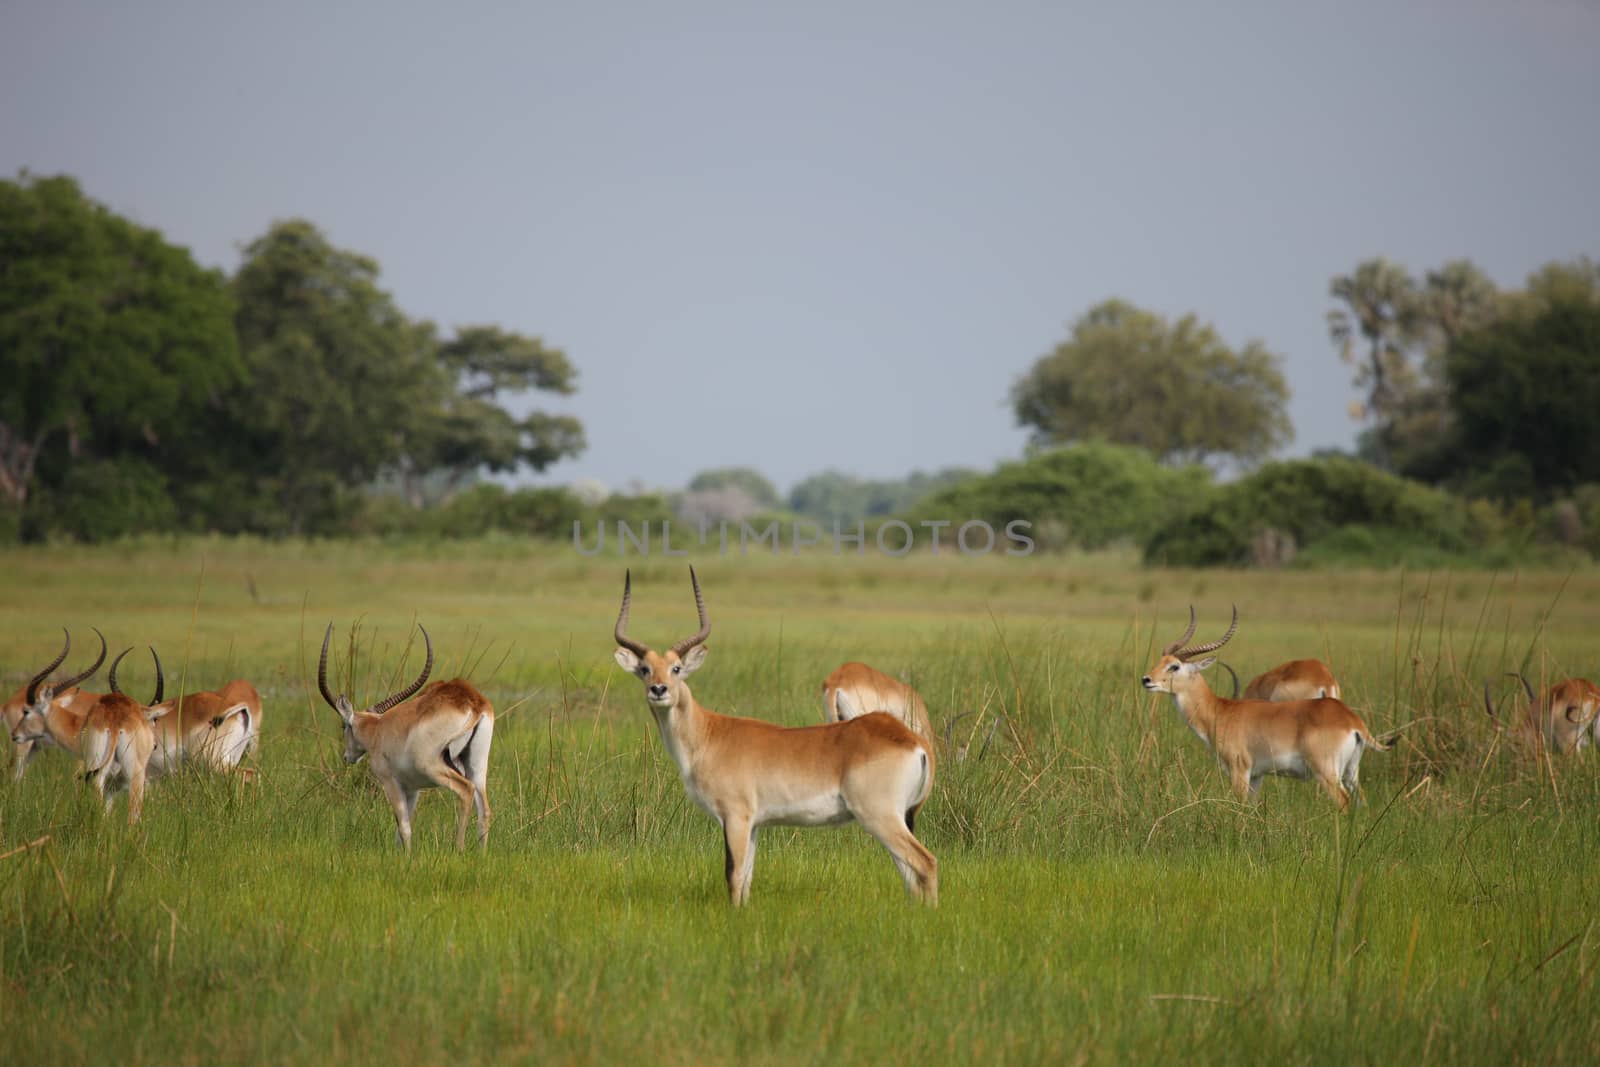 Wild Impala Antelope in African Botswana savannah by desant7474